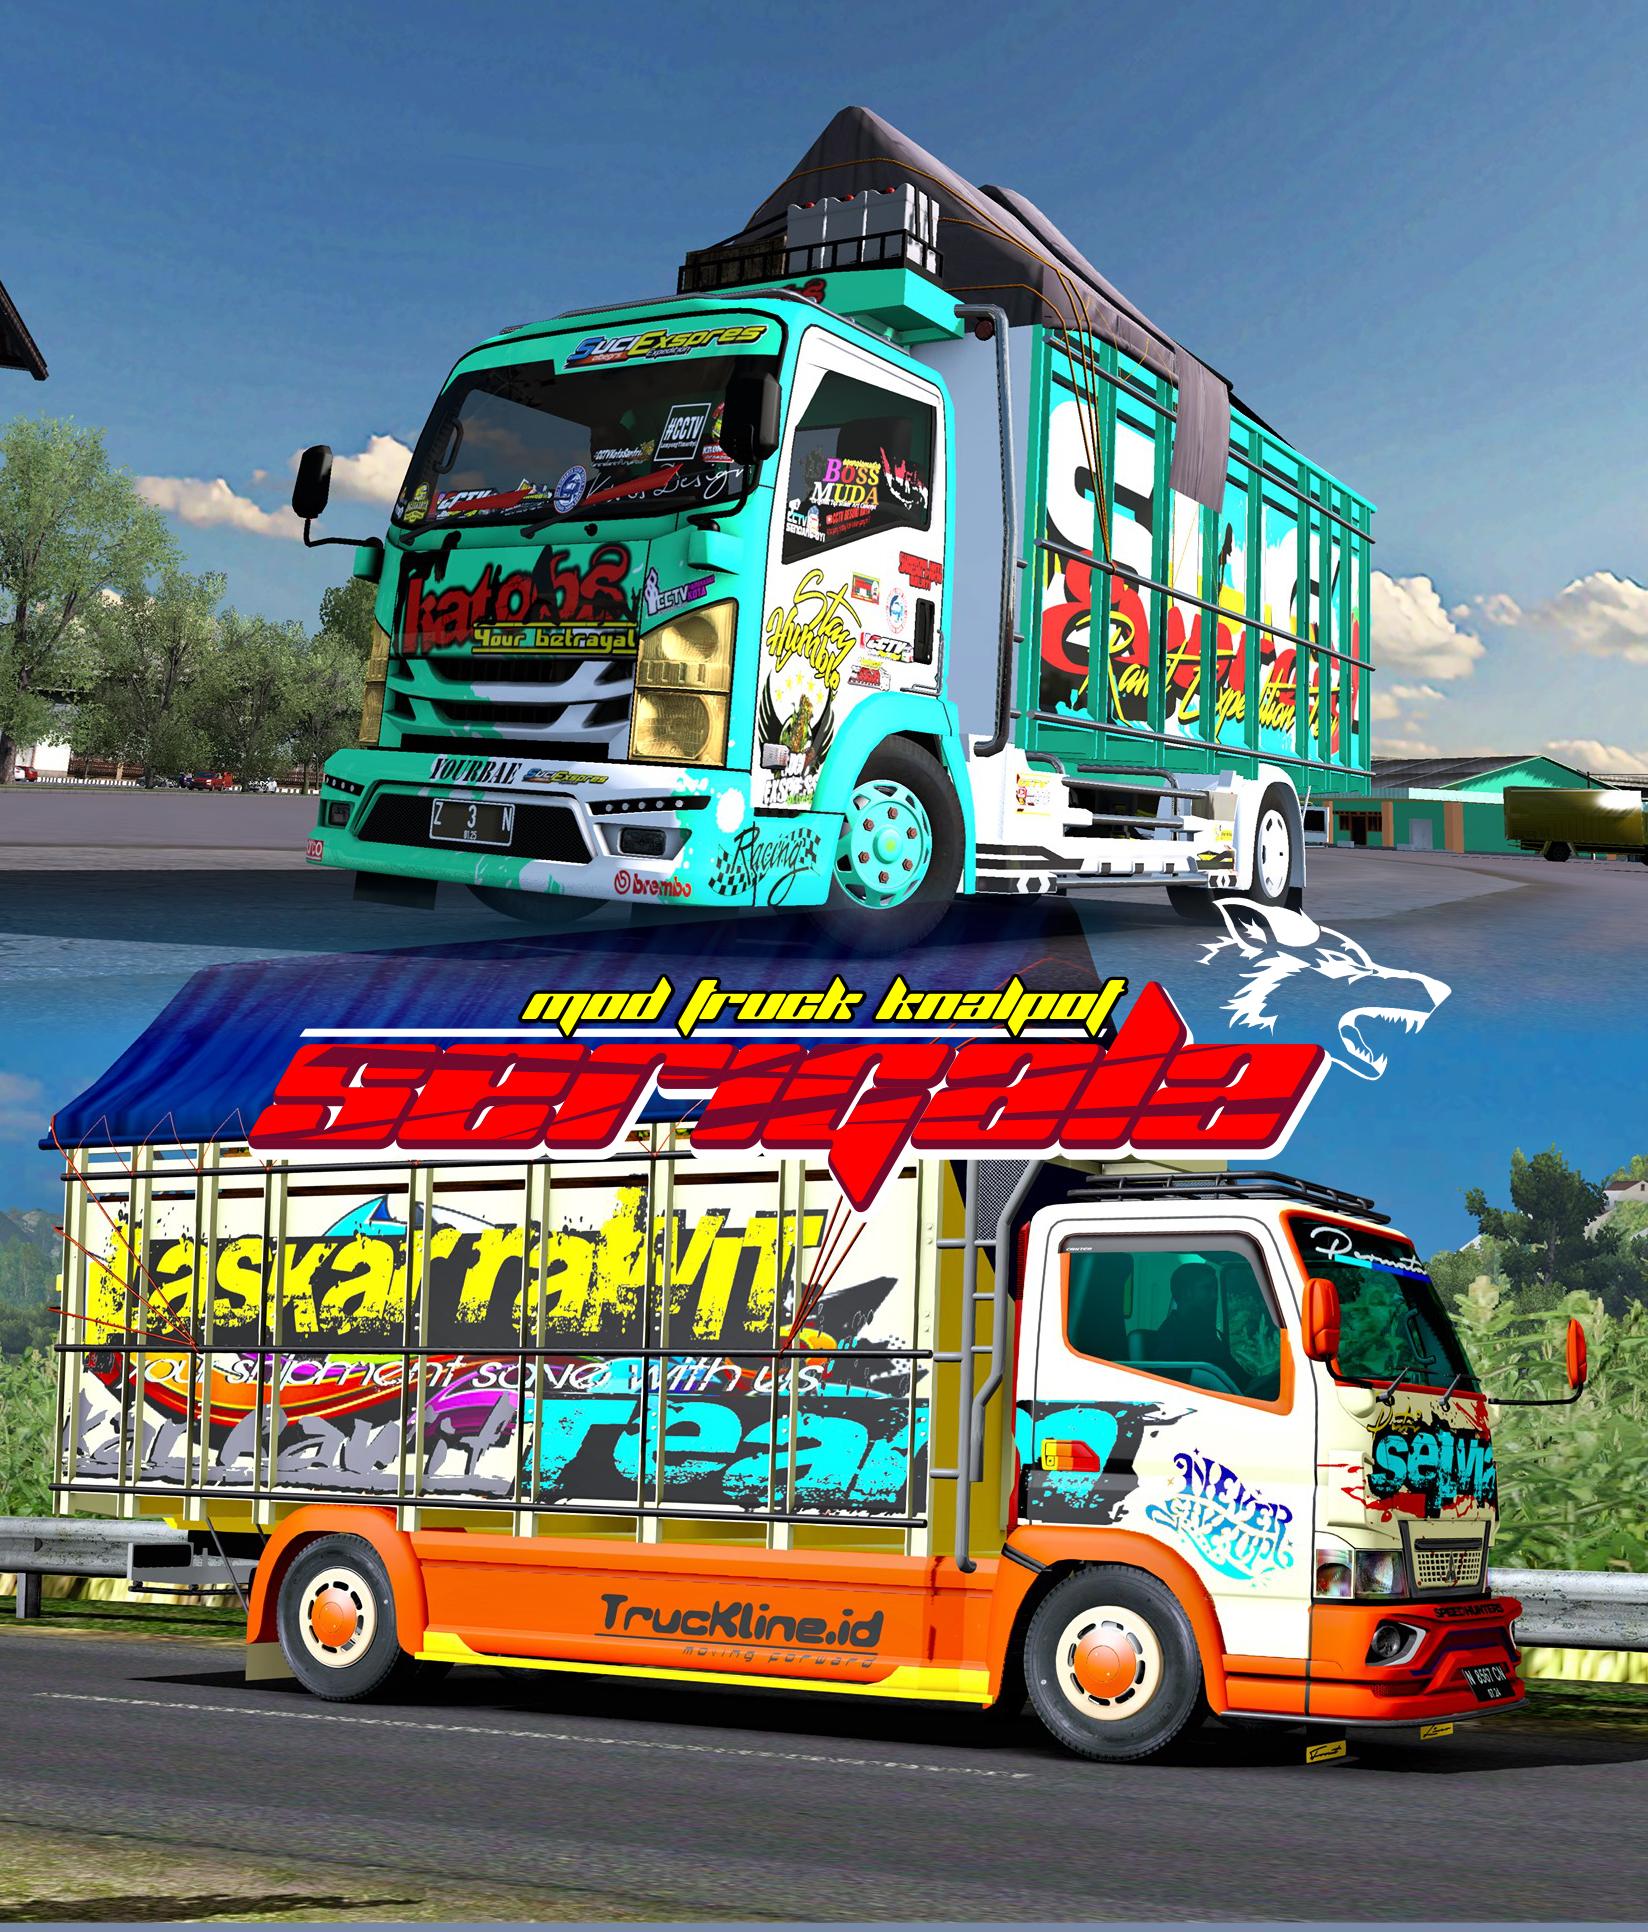 Download mod bussid truck canter full strobo knalpot serigala